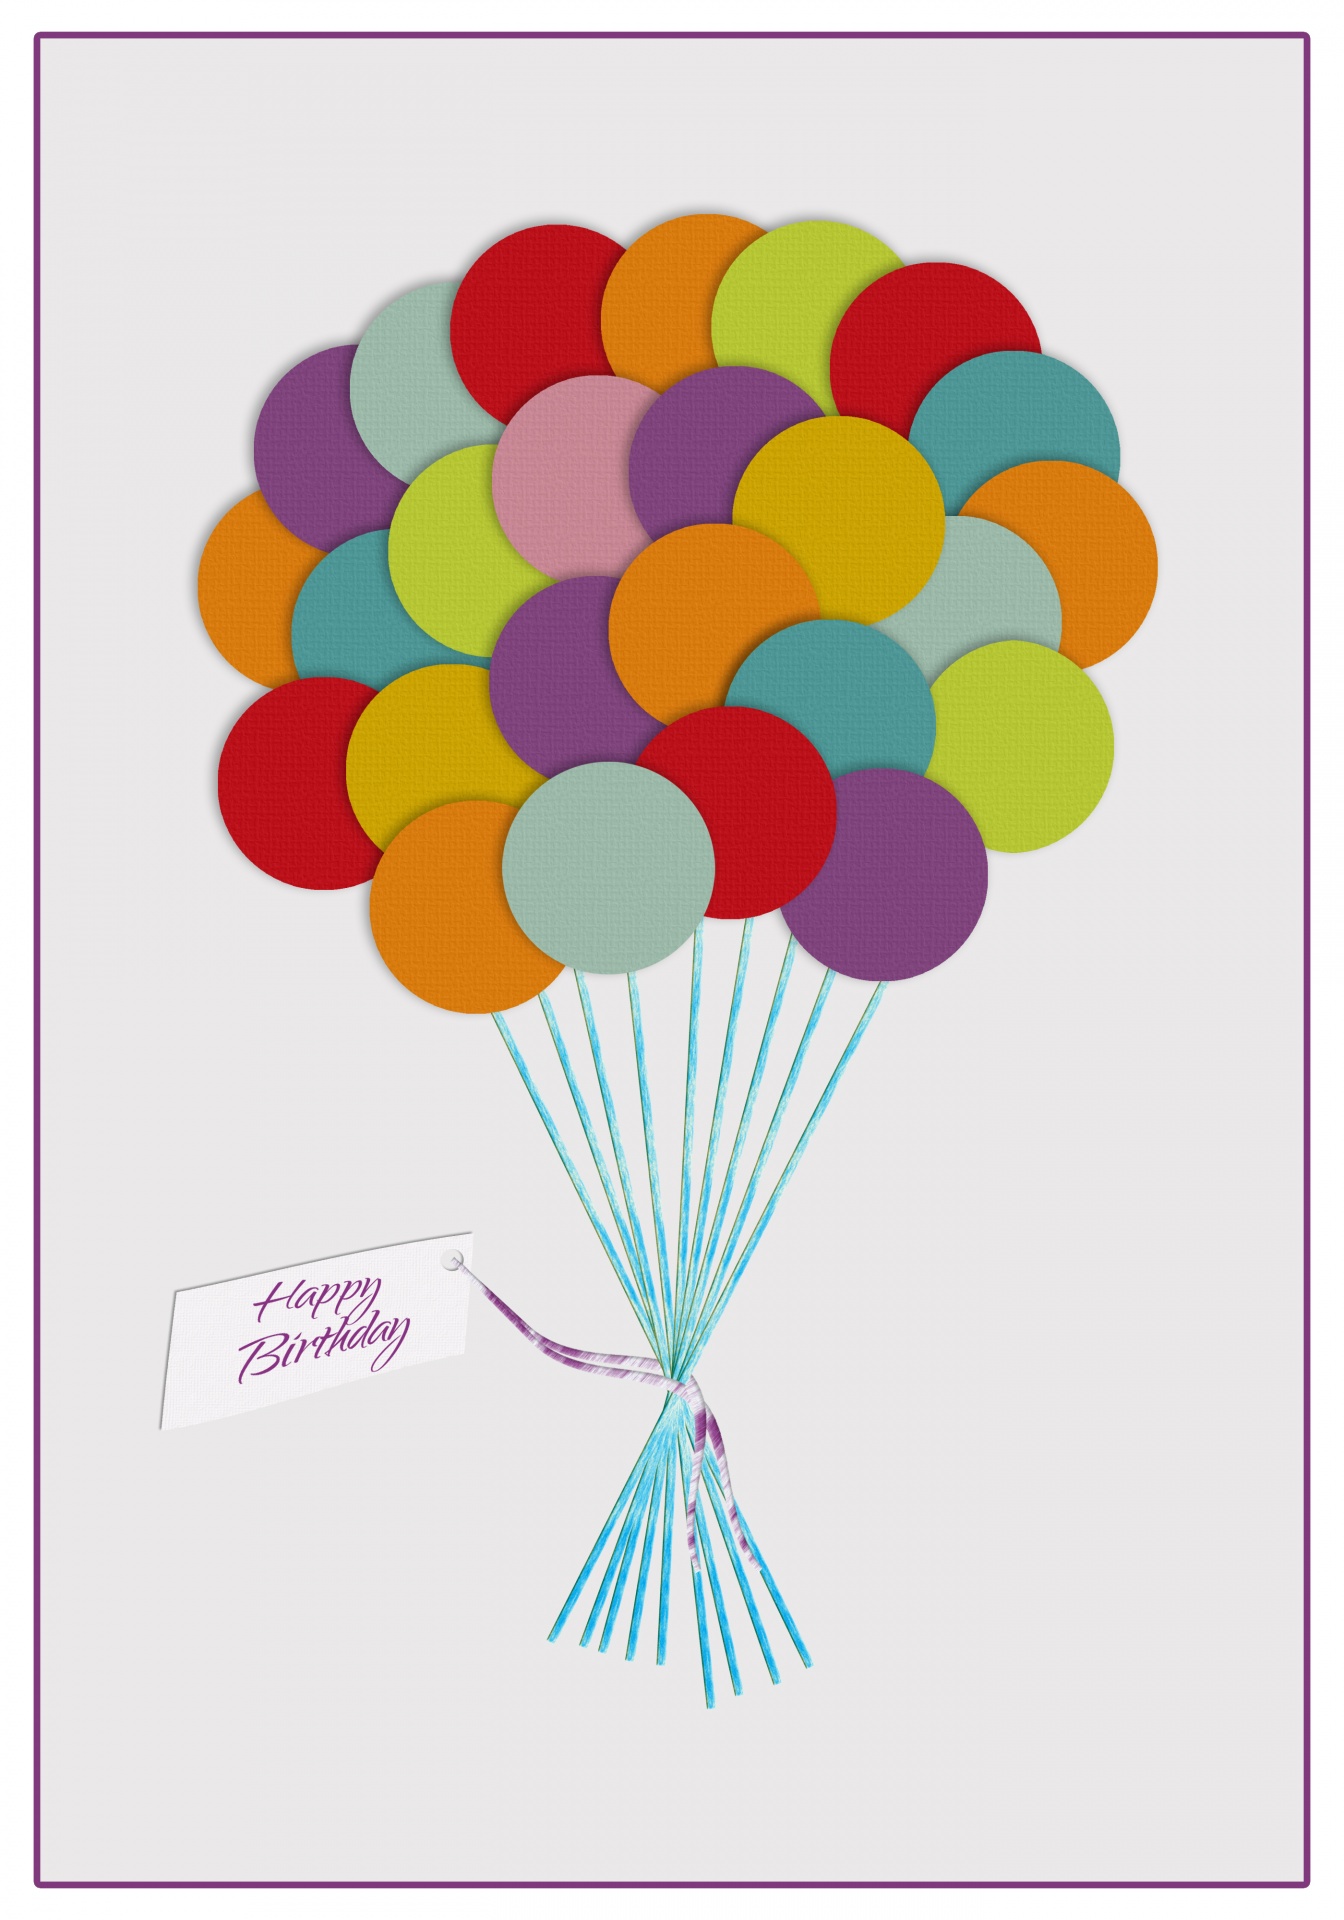 birthday-balloons-free-stock-photo-public-domain-pictures